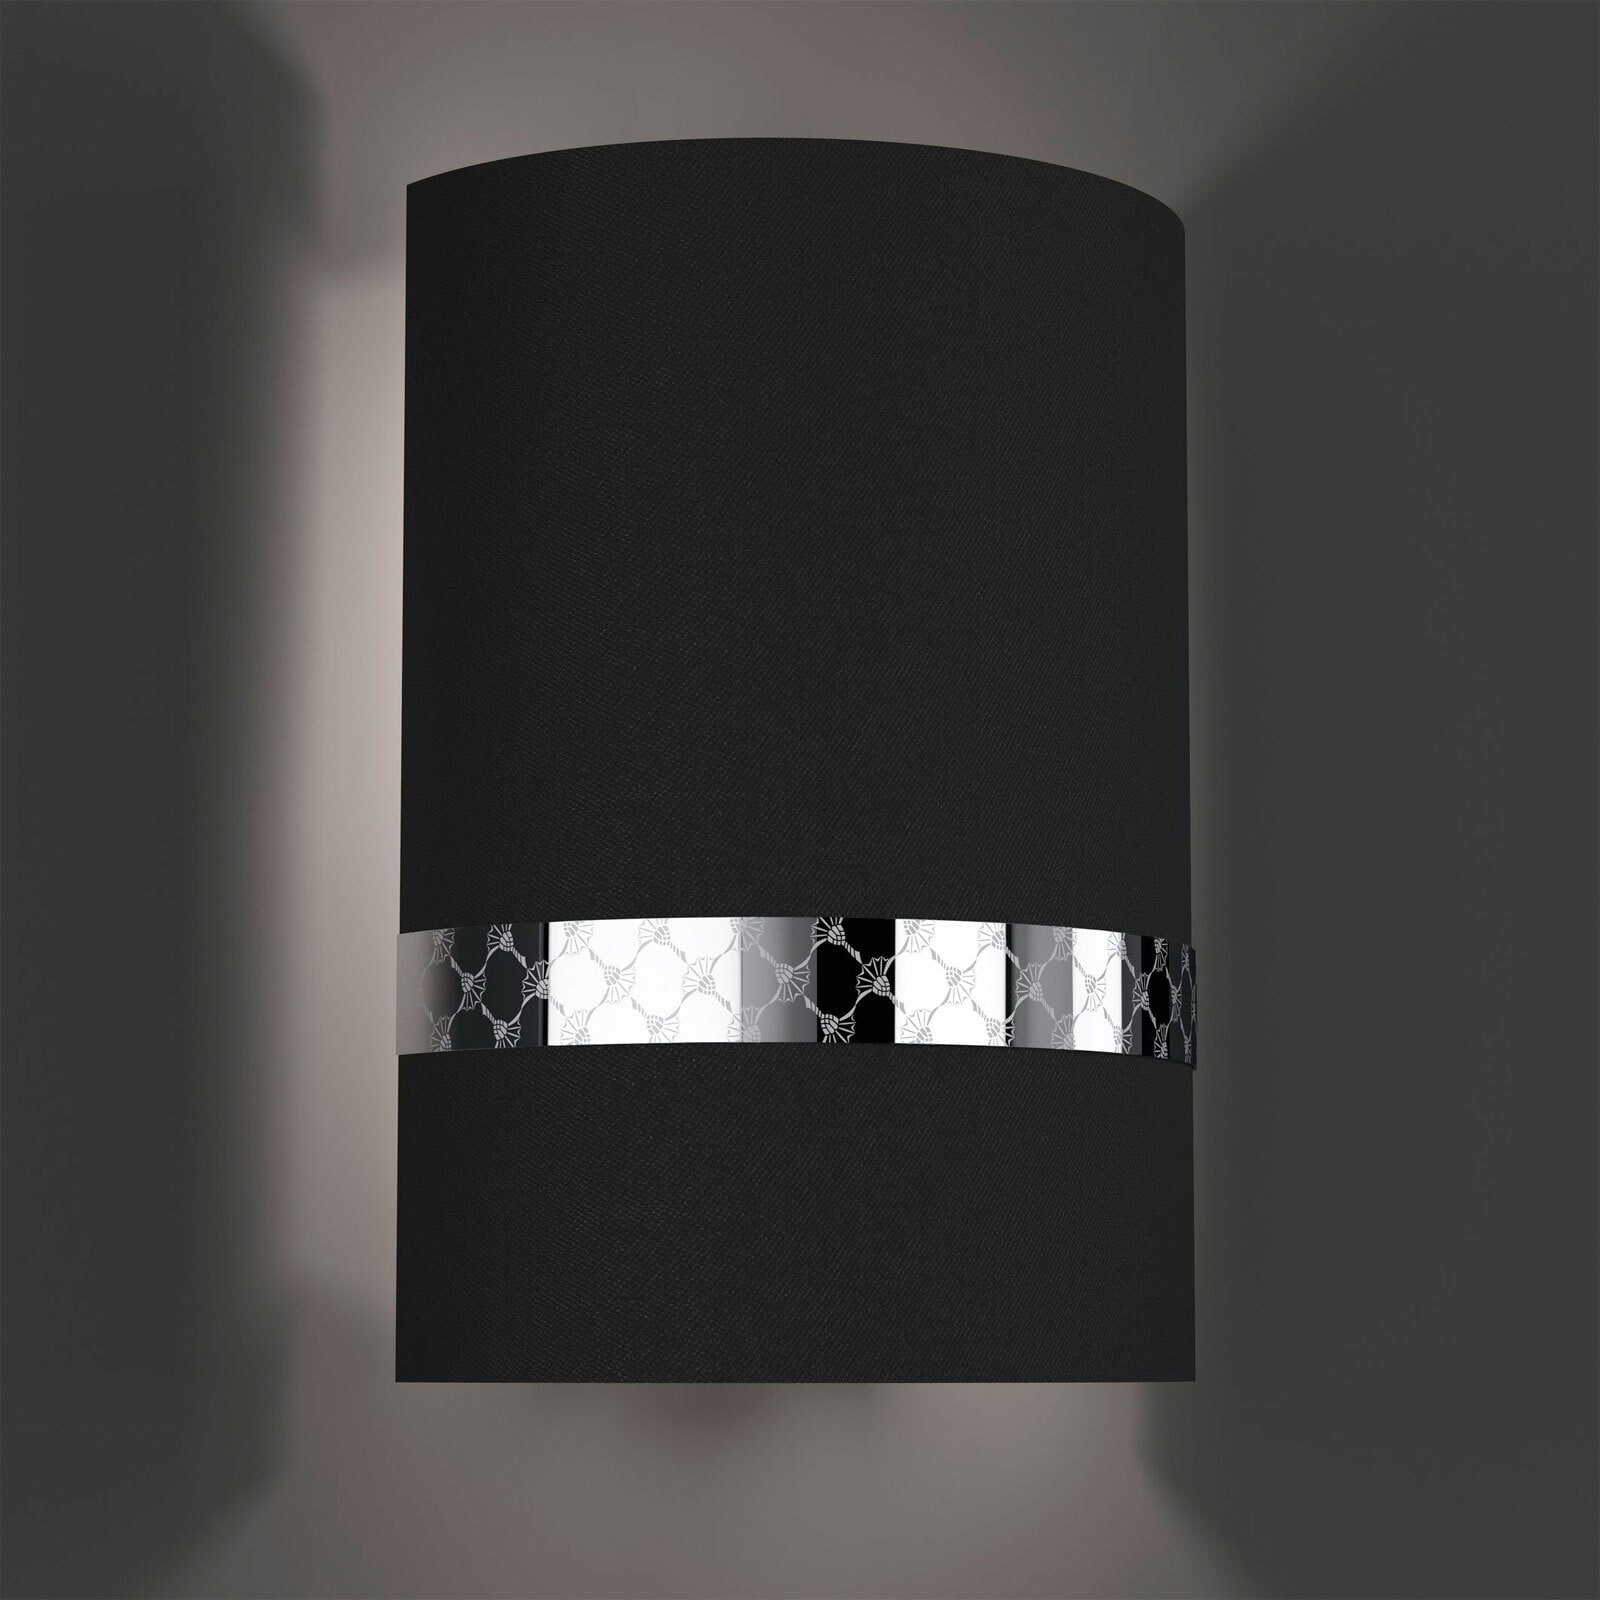 JOOP! Retrofit Wandlampe ROUND-LIGHTS BLACK schwarz /chromfarbig